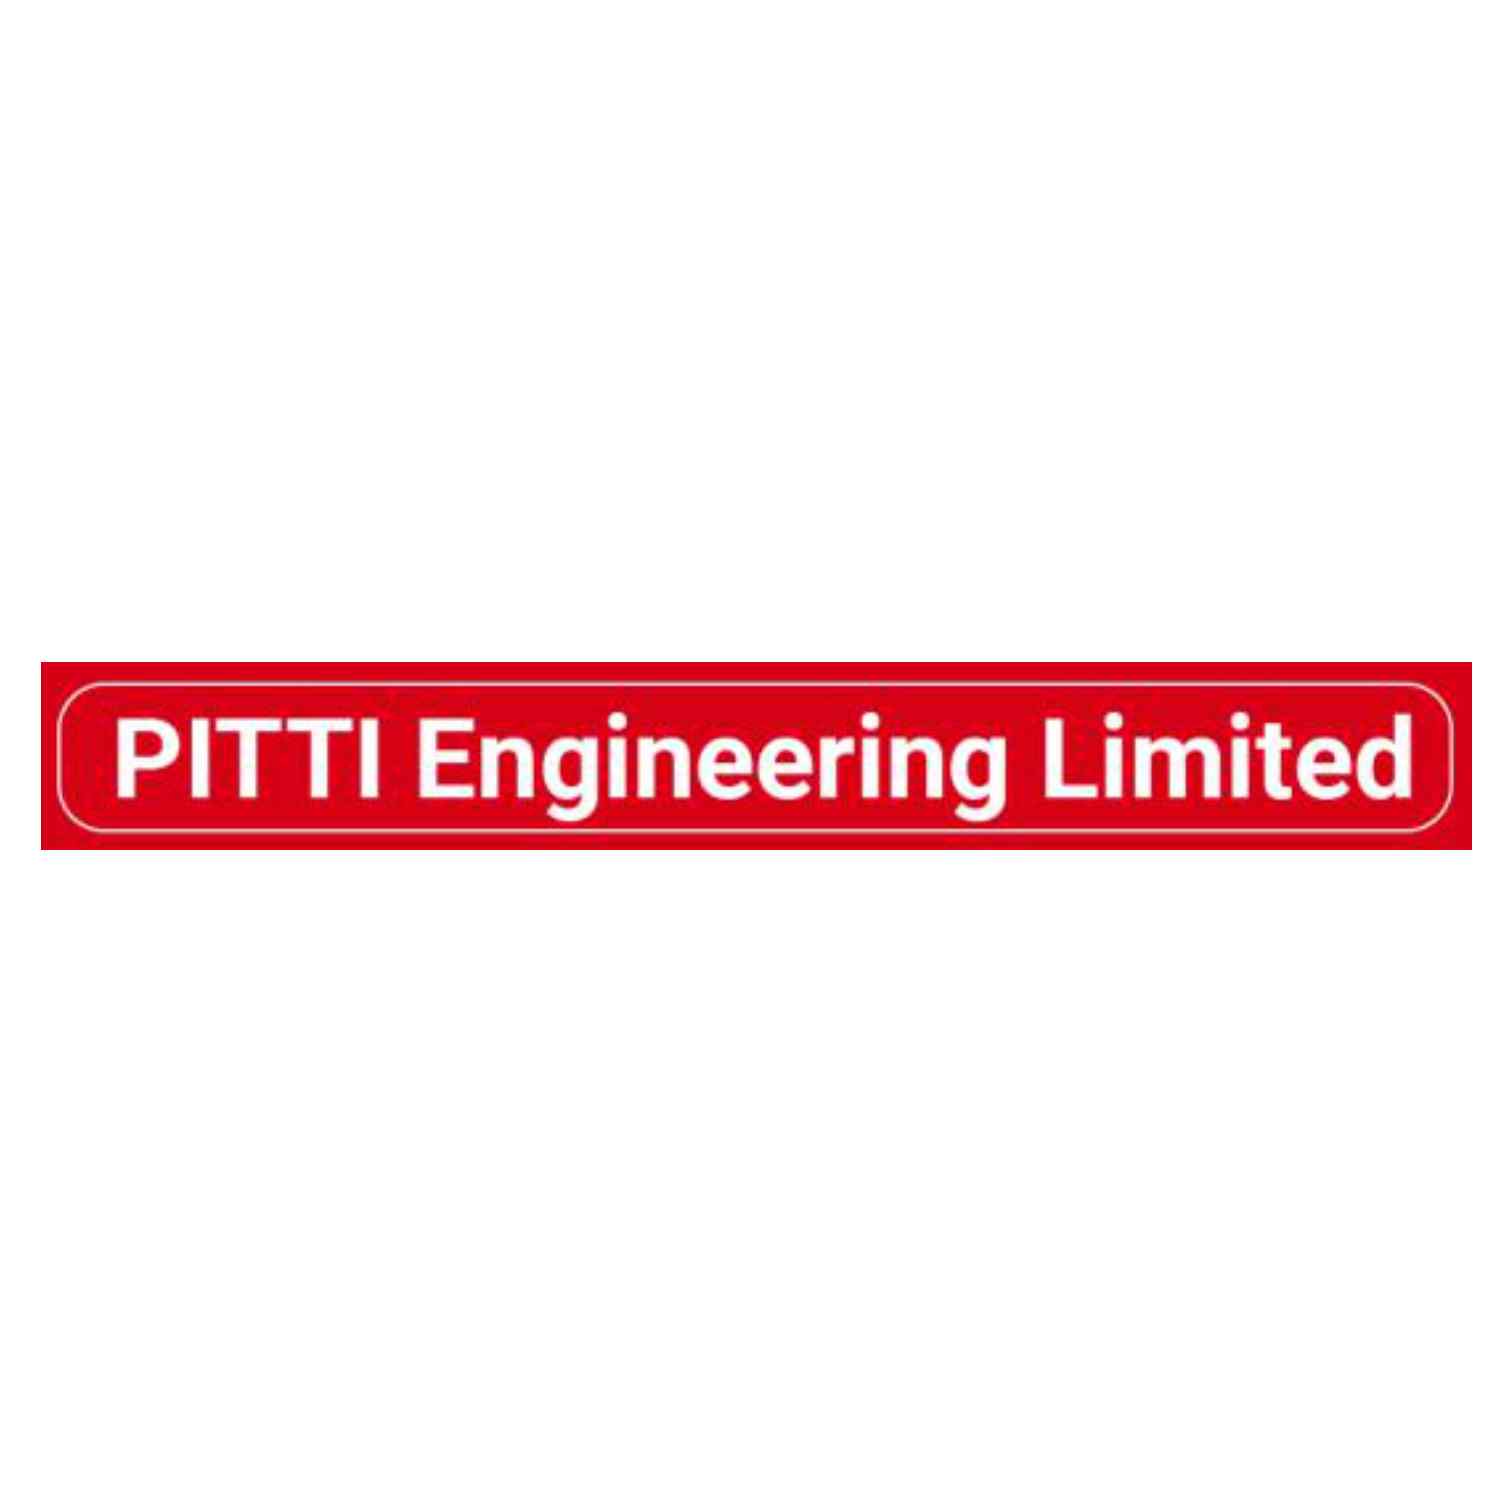 PITTI Engineering Limited